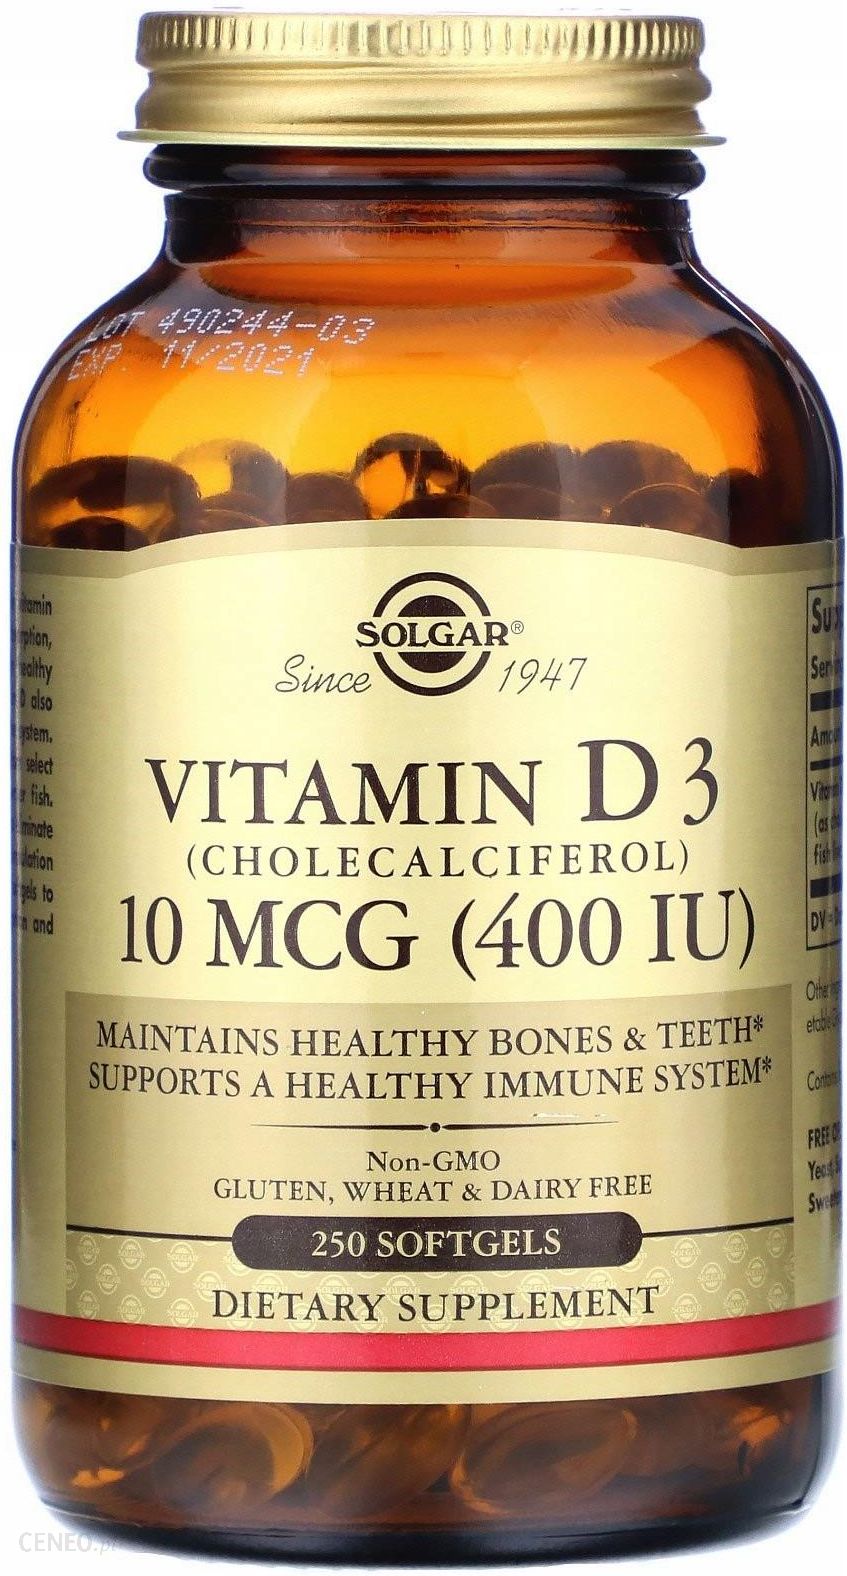 Solgar vitamin d3 cholecalciferol. Капсулы Solgar Vitamin d3. Солгар d3 10 MCG. Солгар витамин д3 капсулы. Solgar, витамин d3 (холекальциферол), 250 мкг (10 000 ме).